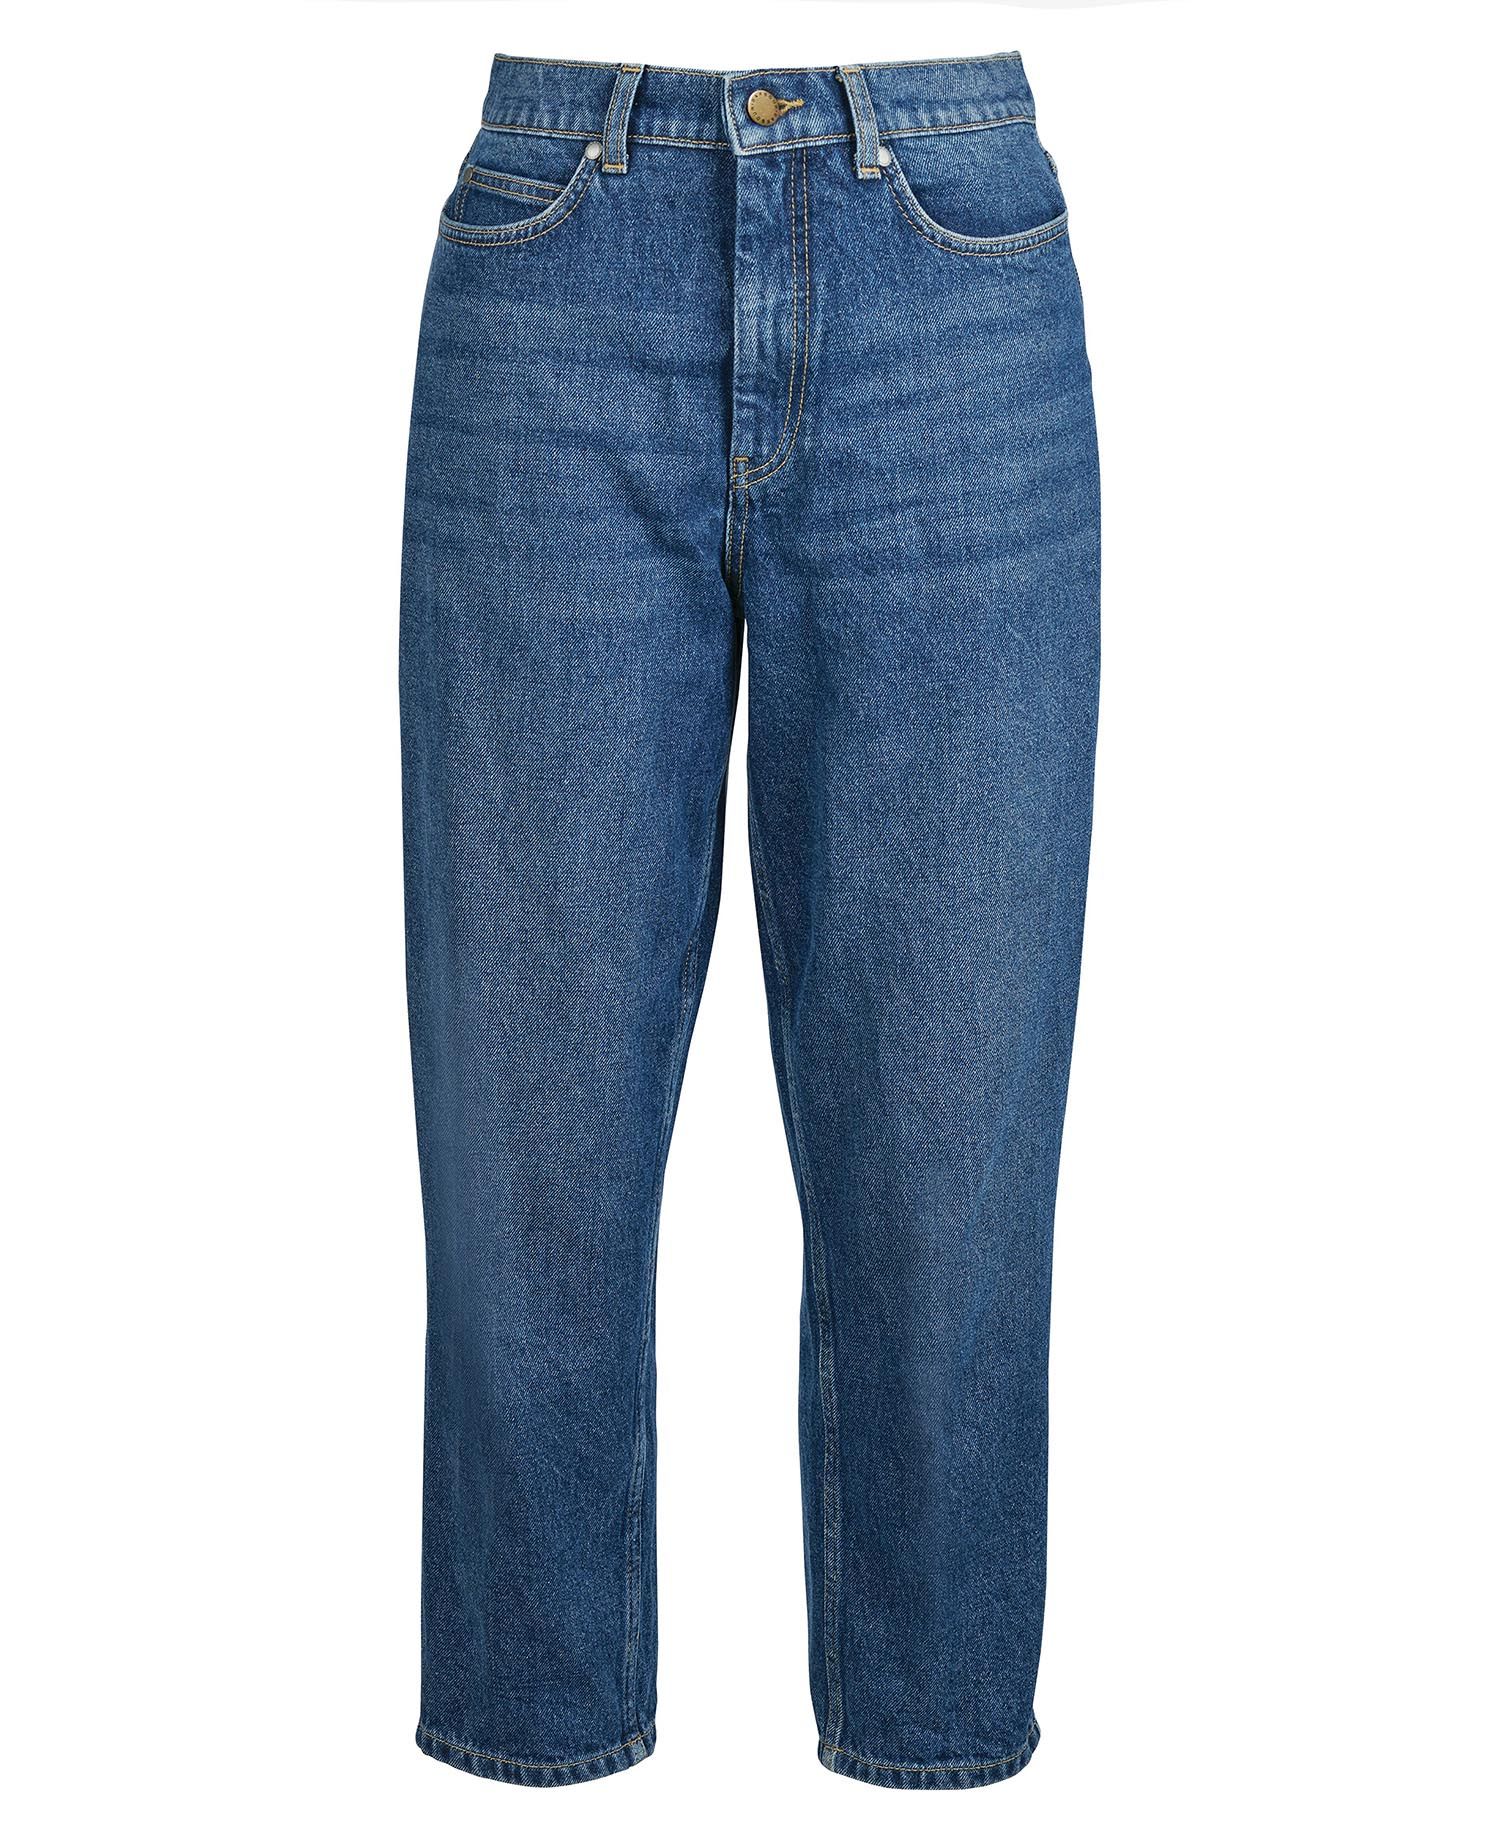 BARBOUR Moorland High - Rise Jeans BLUE - Henry BucksWOMENSWEAR40AW230018 - BLUE - 6